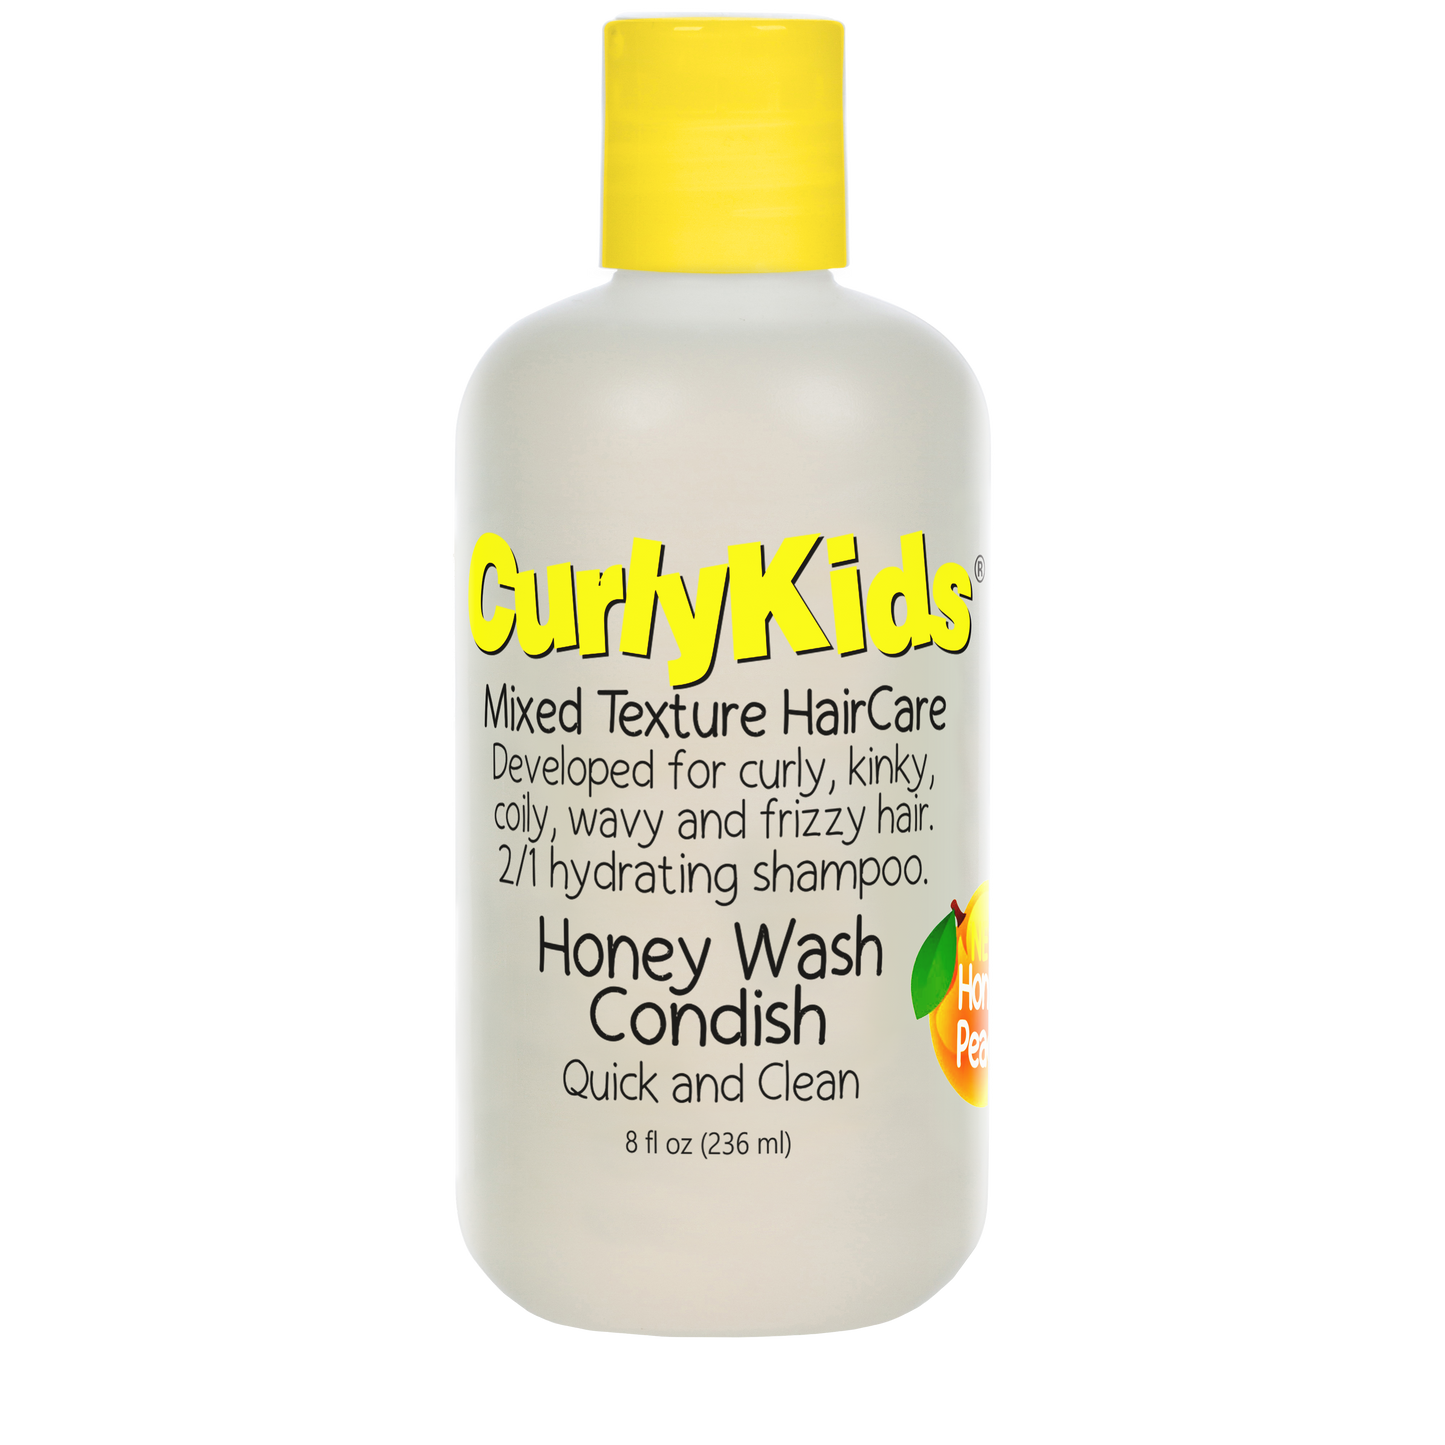 Honey Wash Condish